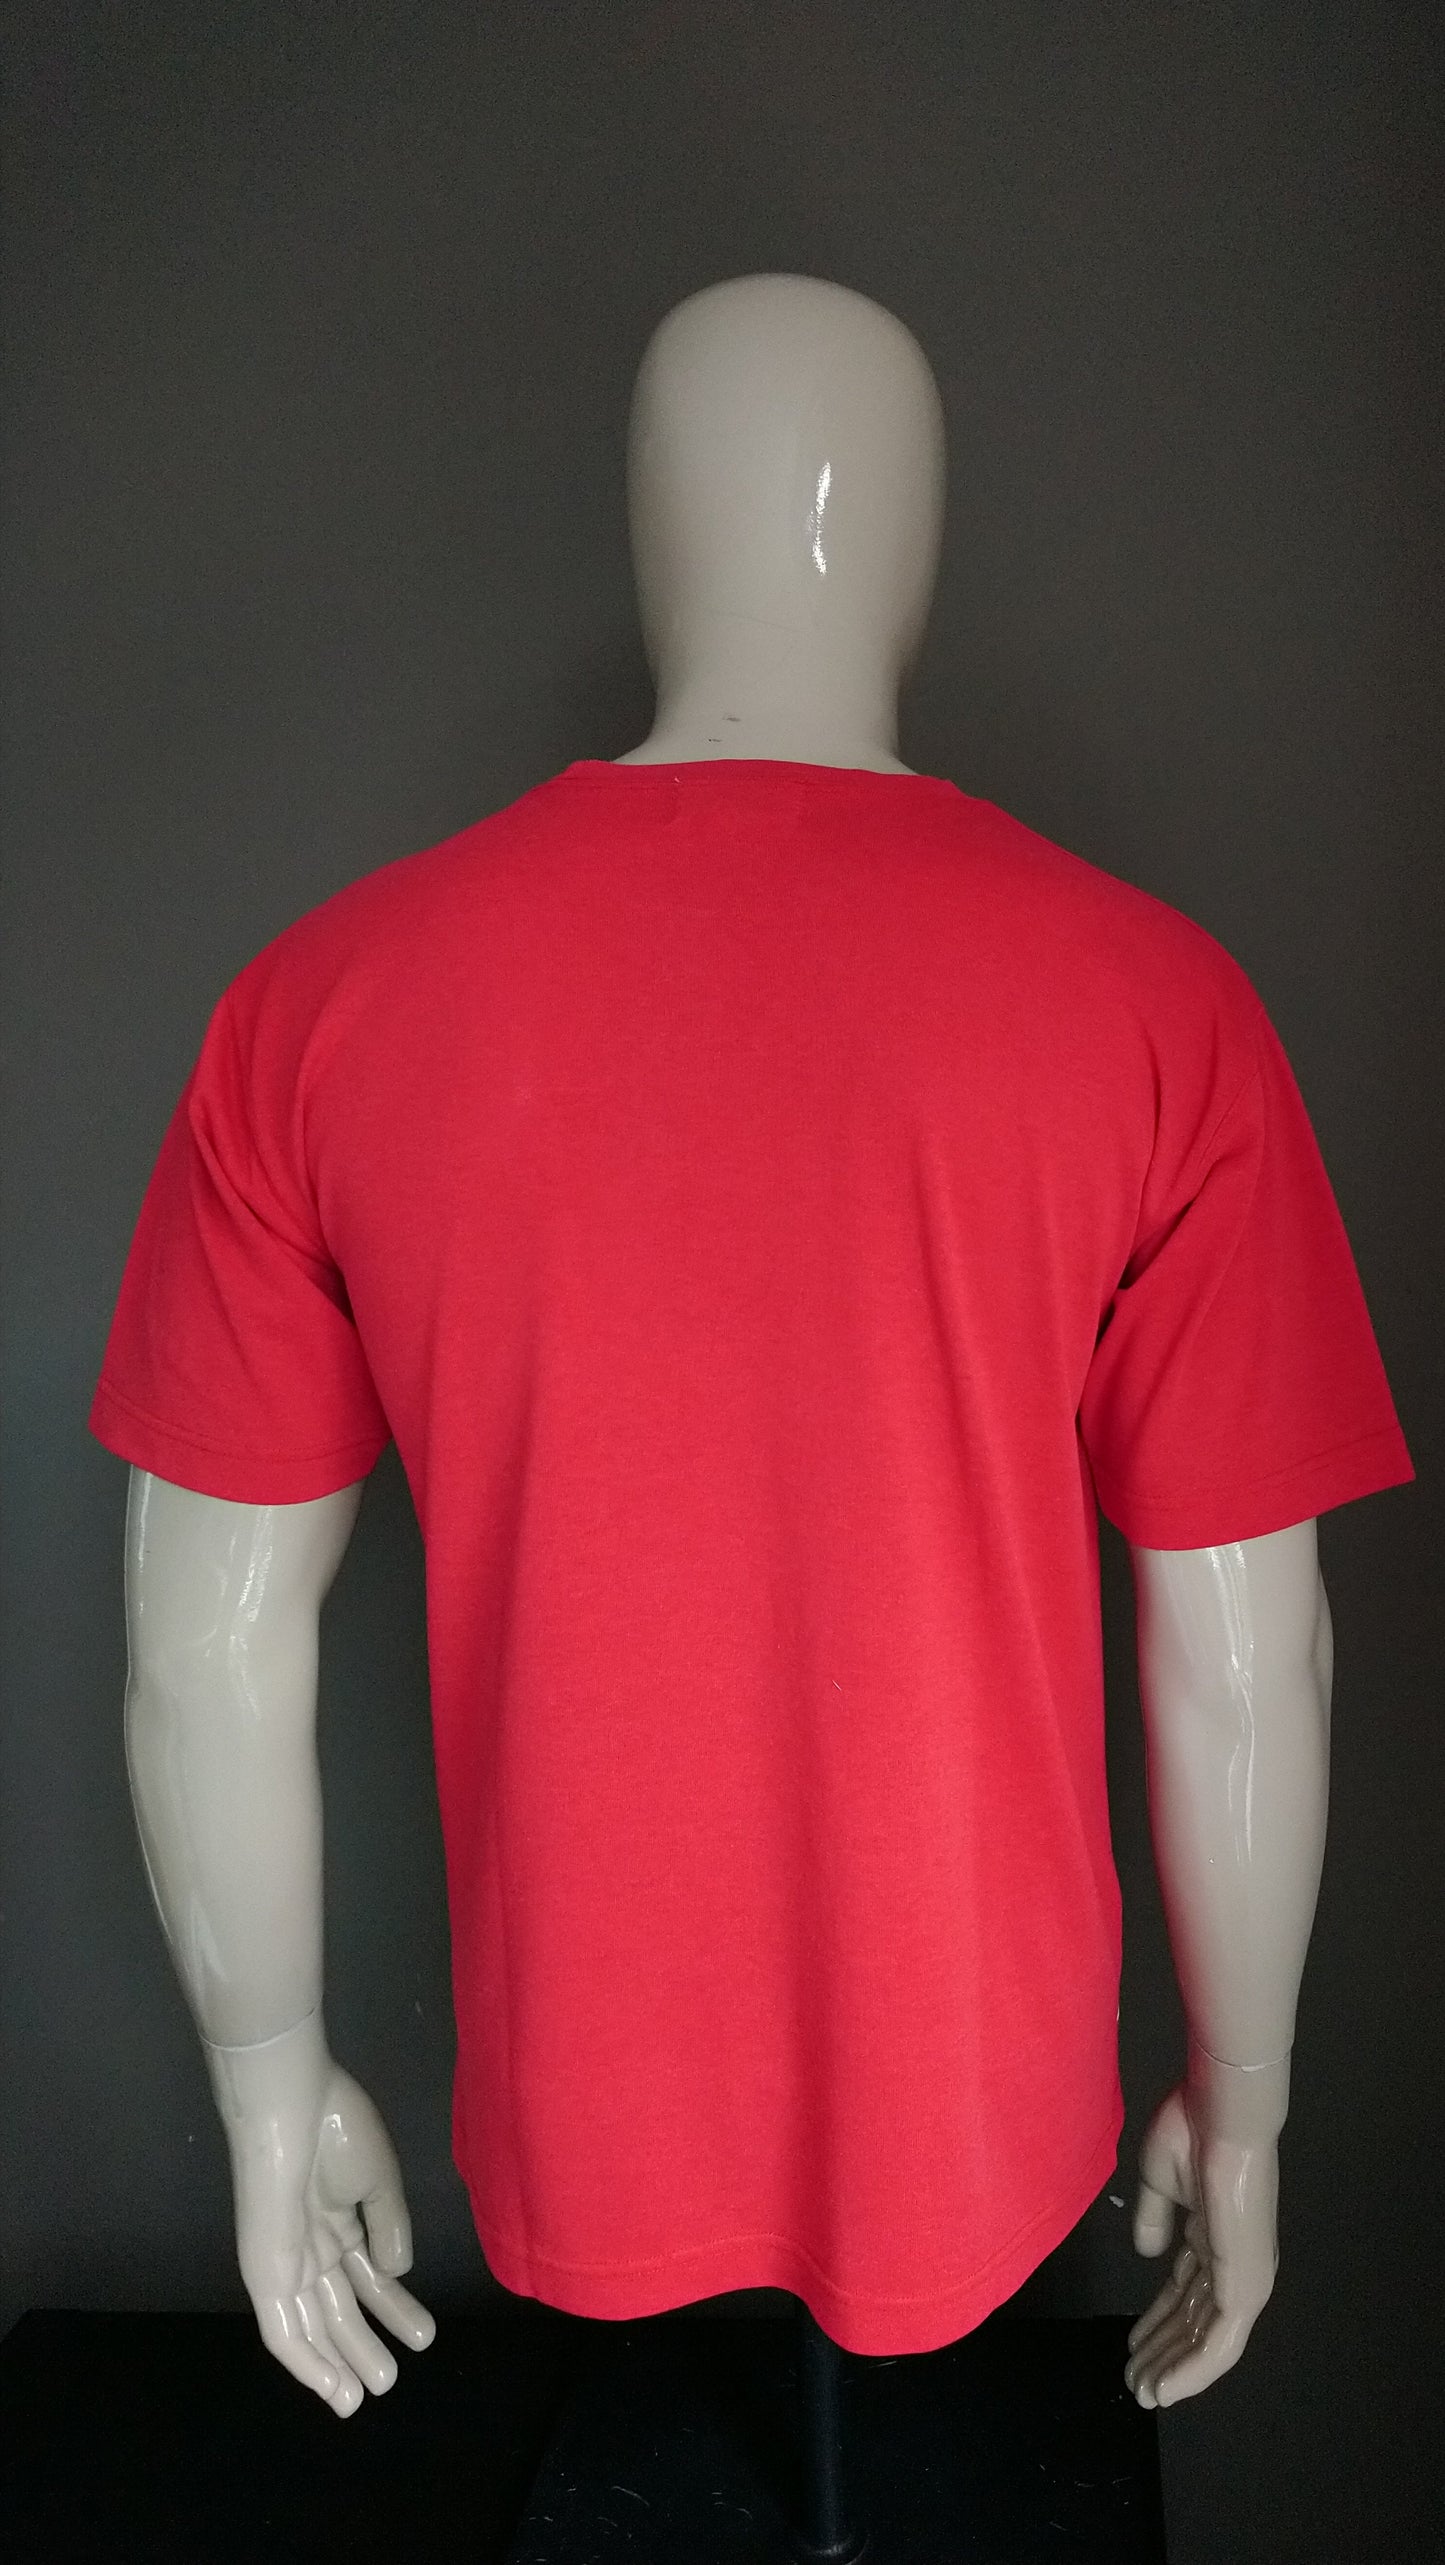 Vintage Parco Authentic sportwear shirt. Rood met opdruk. Maat S / M.